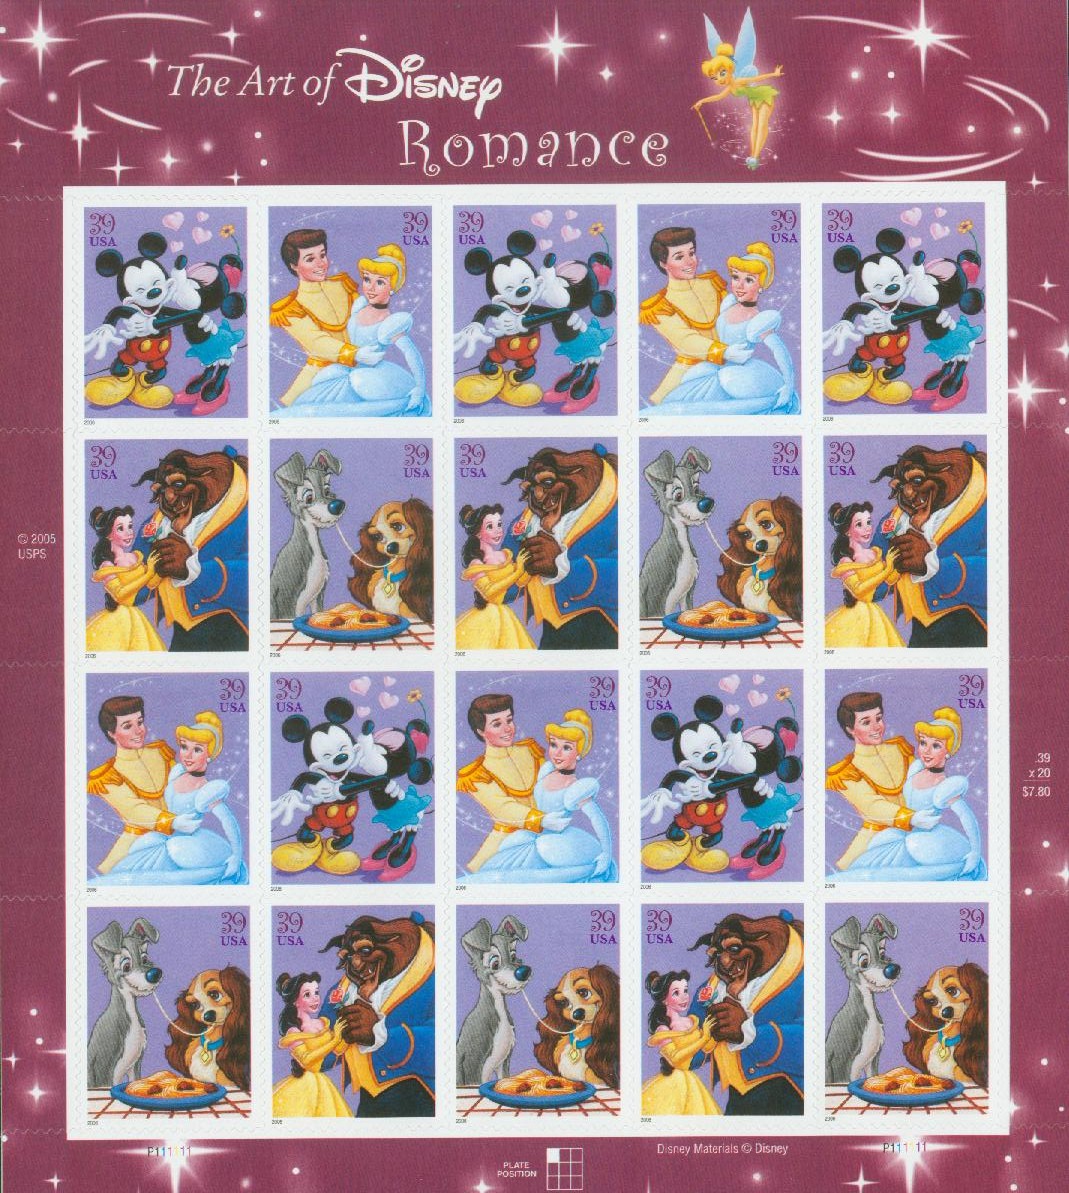 42c Disney Imagination Stamps .. Unused US Postage Stamps .. Block of 4 –  treasurefoxstamps